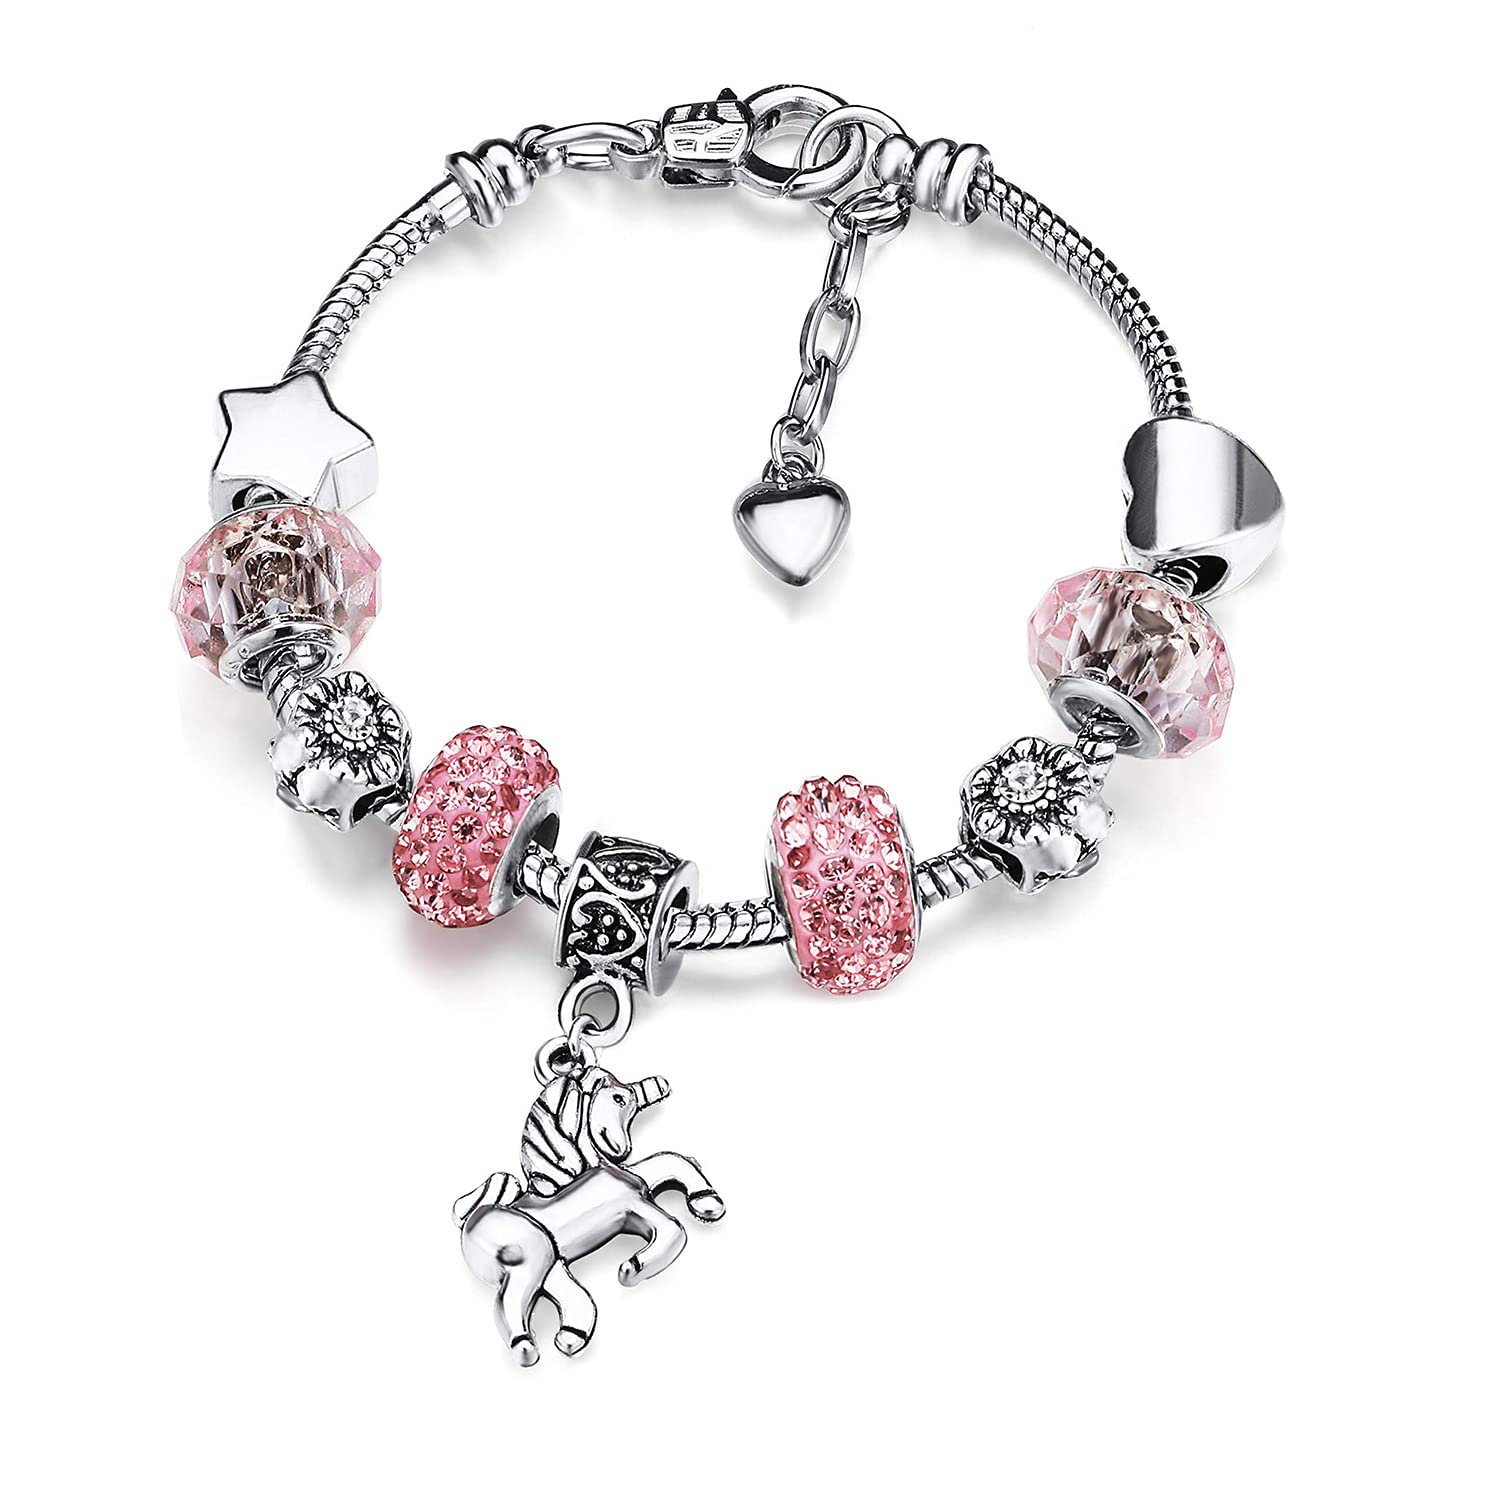 Lahviuu Unicorn Bracelet for Girls, Unicorn Sparkly Rhinestone Crystal Charm Bracelets Horse Jewellery Birthday Gifts for Kids Personalised Shiny Bangle Jewelry Gift for 3~14 Year Old Girl, Pink 14cm